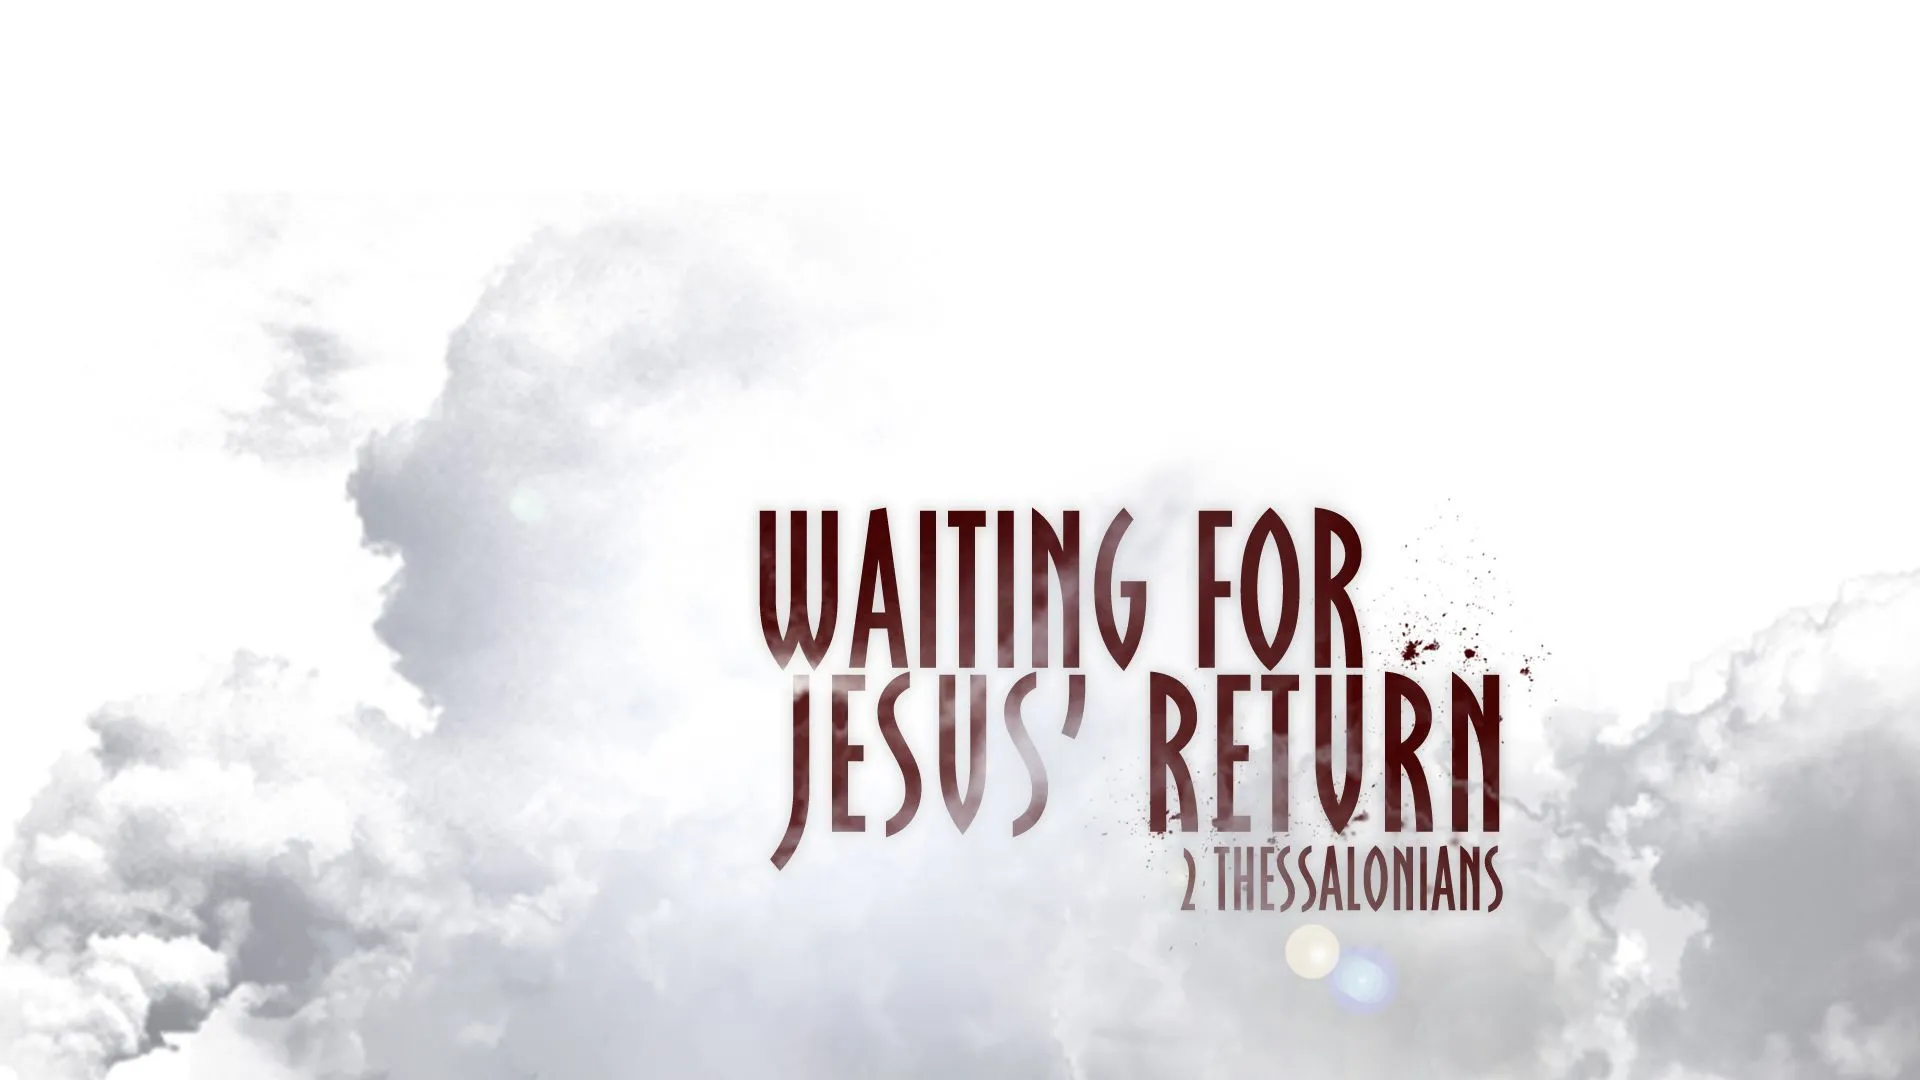 Waiting For Jesus Return wallpaper - 194624